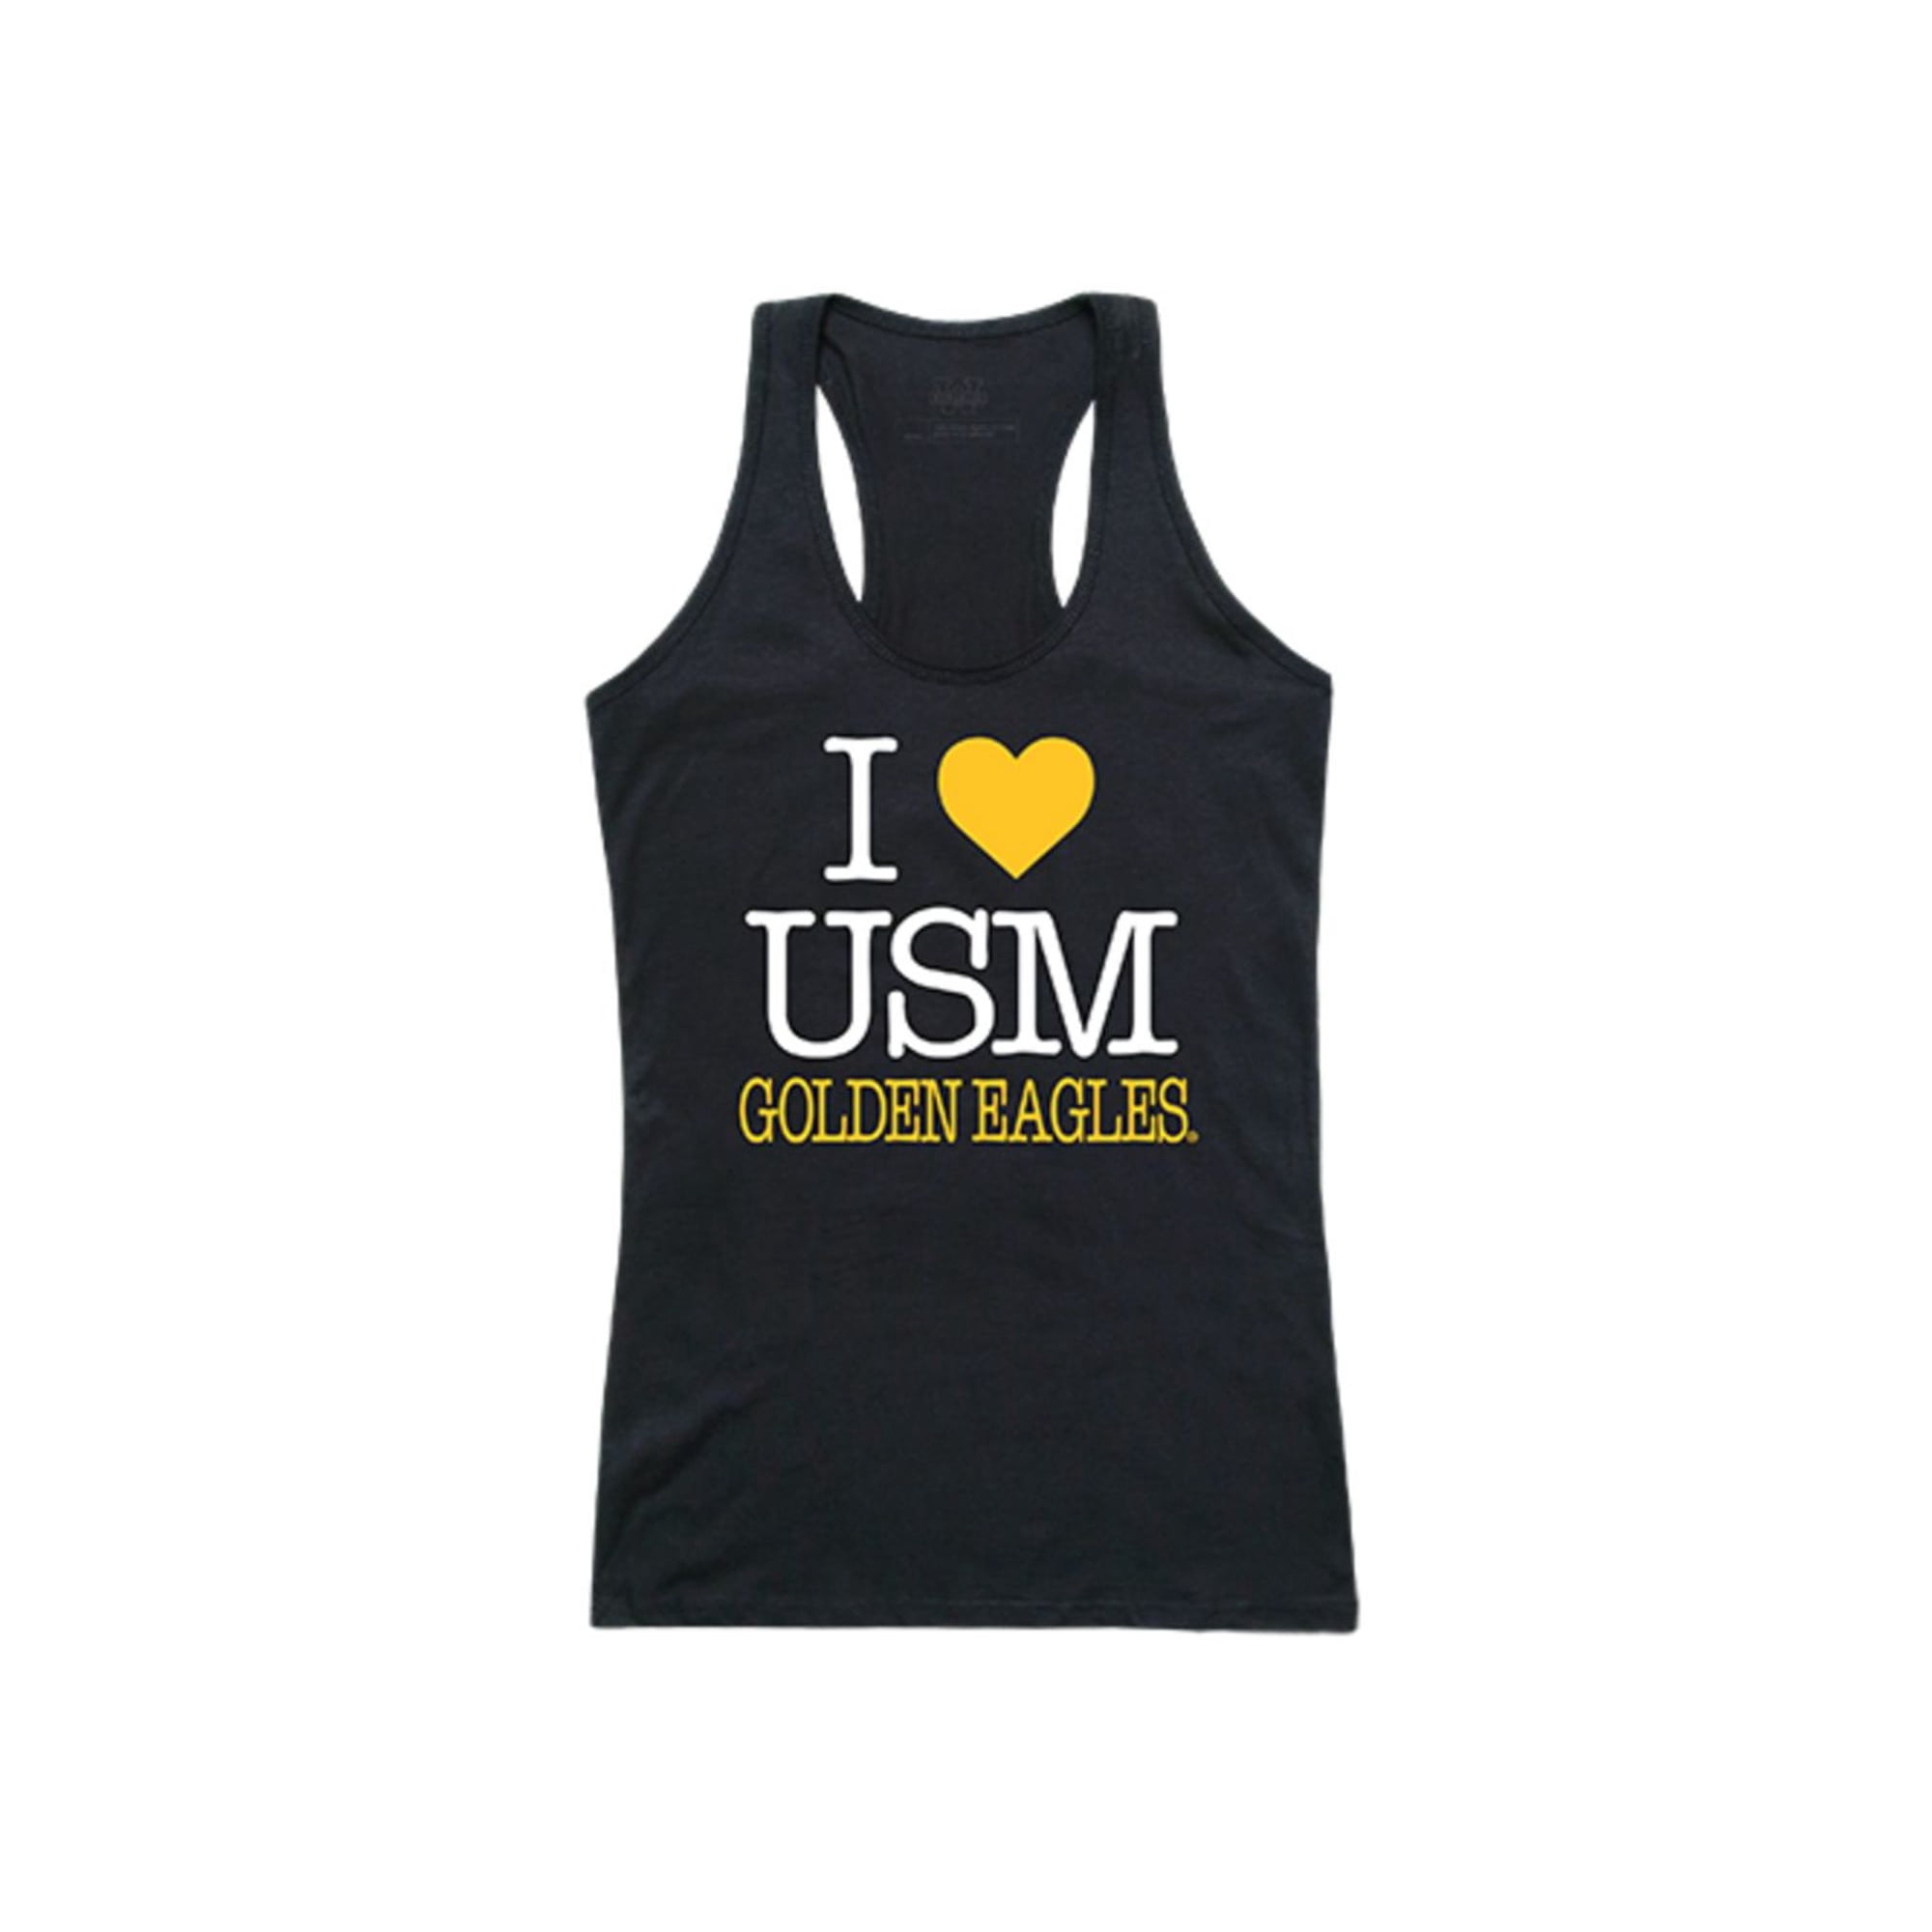 W Republic USM University of Southern Mississippi Golden Eagles Womens Love Tank Top T-Shirt Black, Women's, Size: Medium